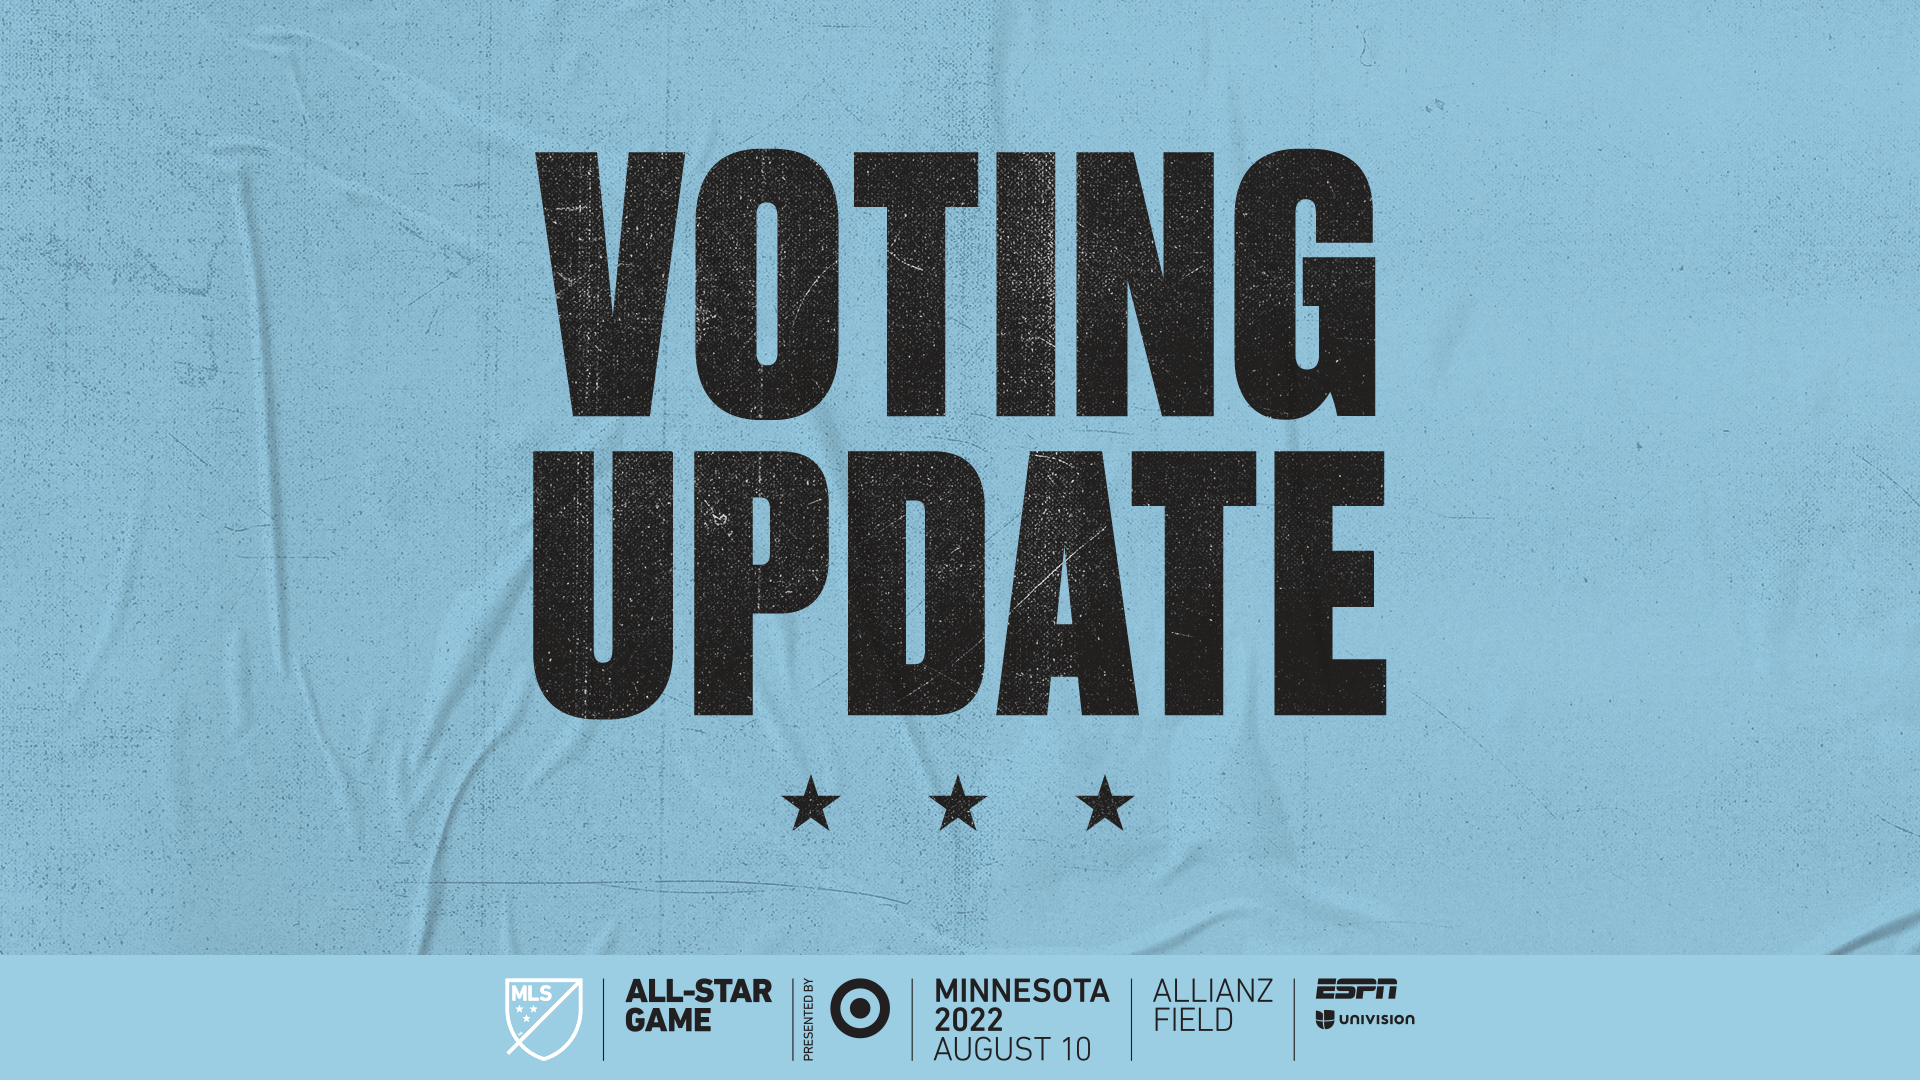 2022 MLS All-Star voting update - June 22, 2022